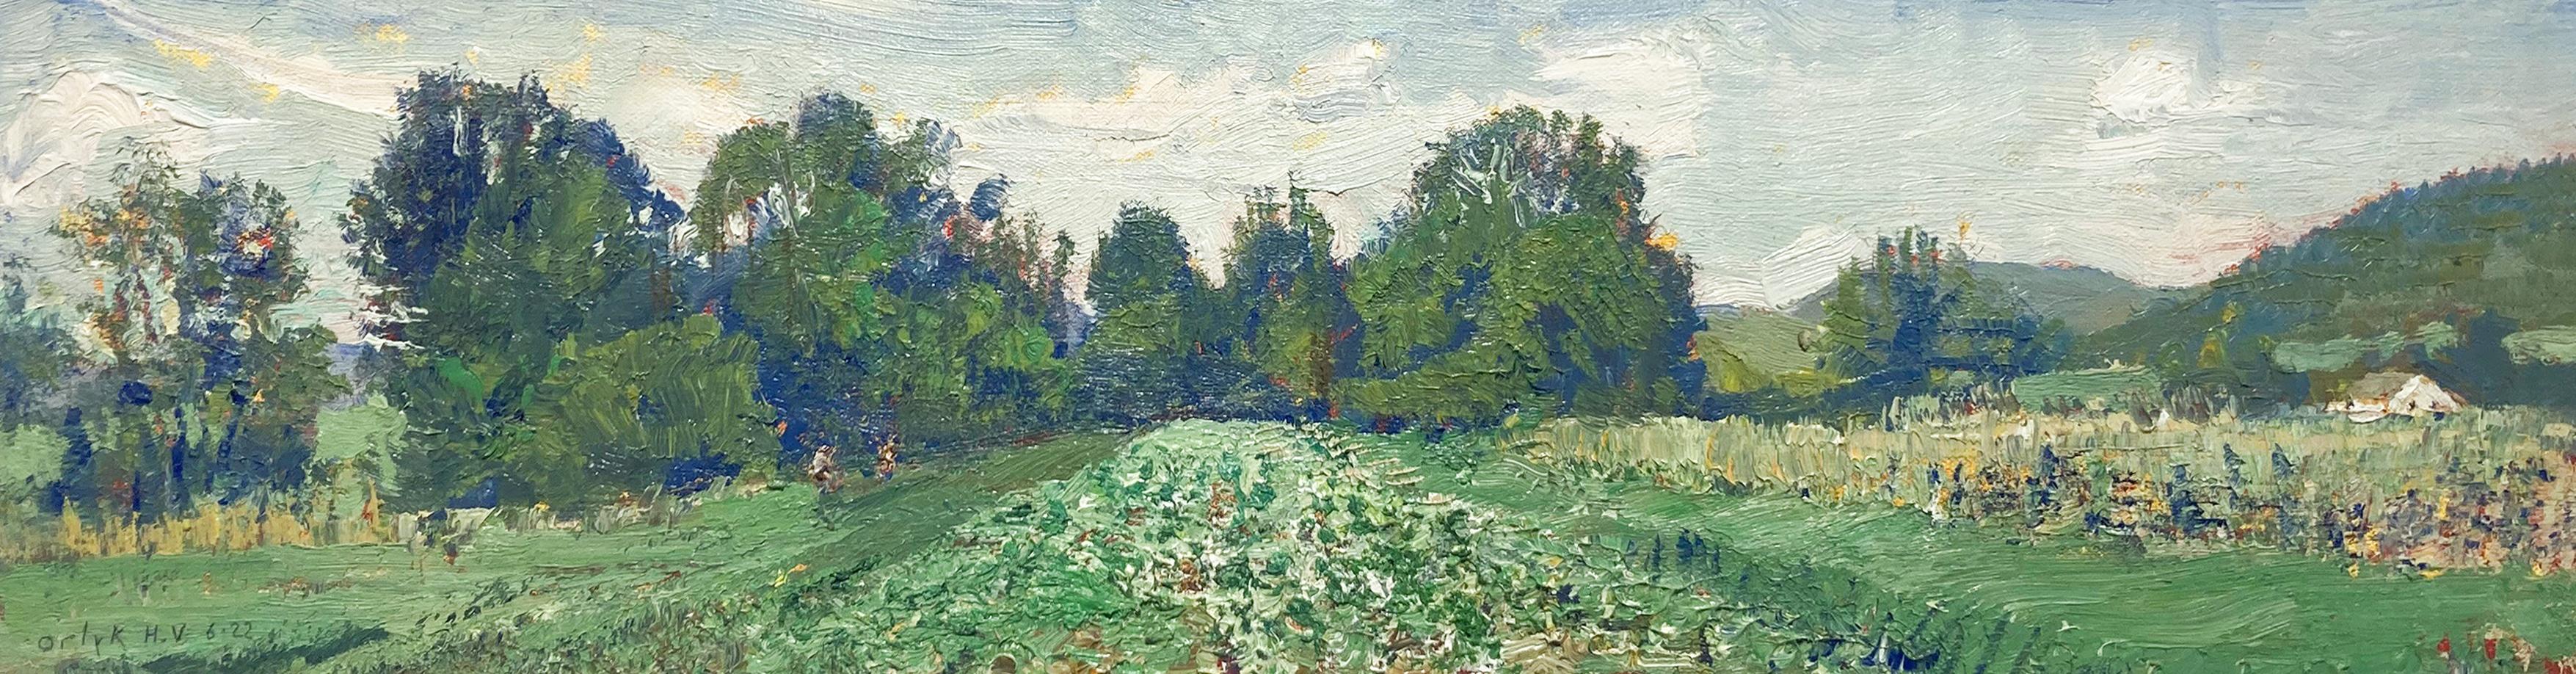 Truehart's (Impressionist Rural En Plein Air Landscape, Country Farm Fields) - Painting by Harry Orlyk